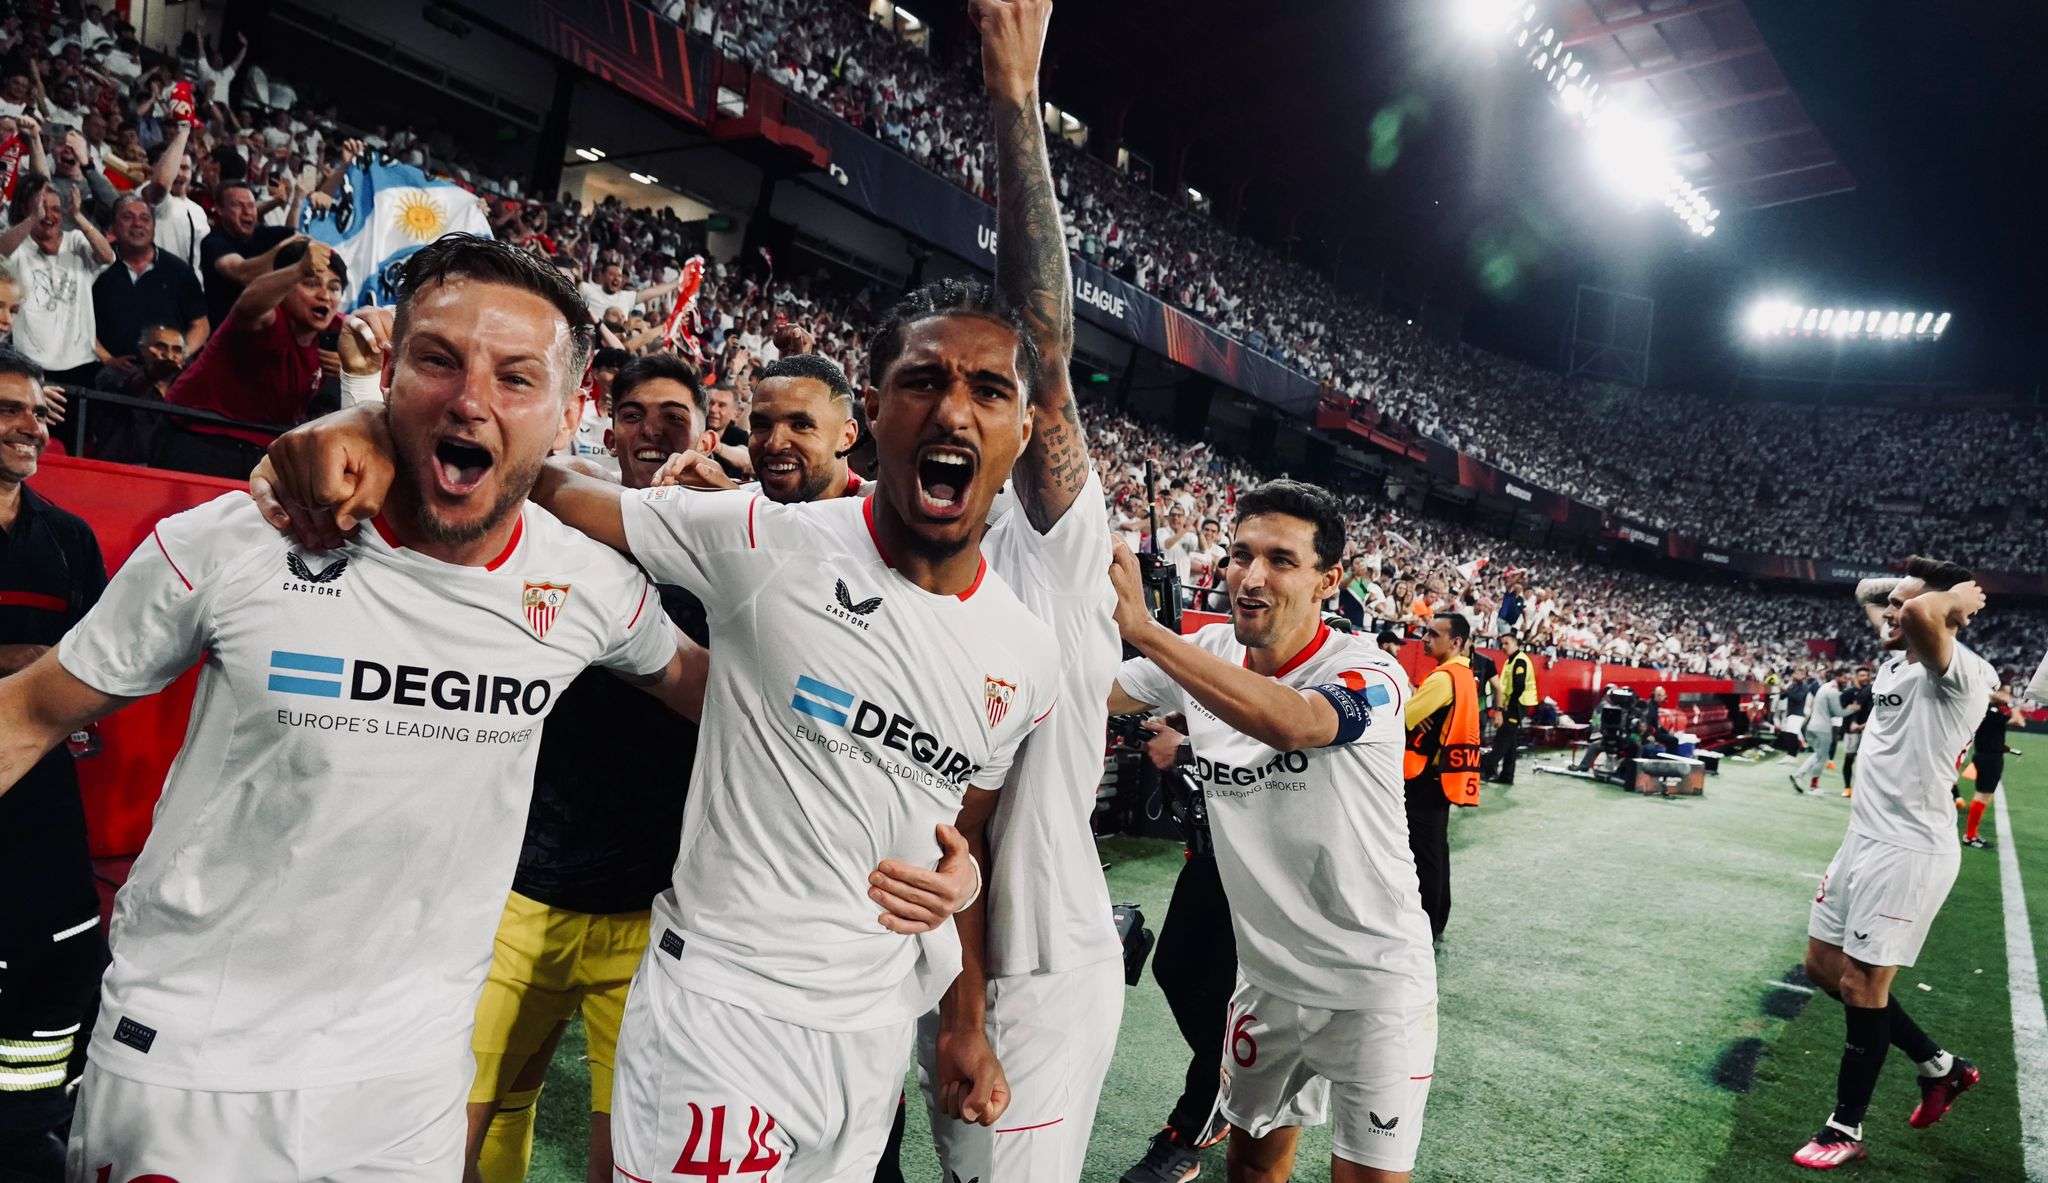 Manchester United falha feio e é eliminado pelo Sevilla na Europa League